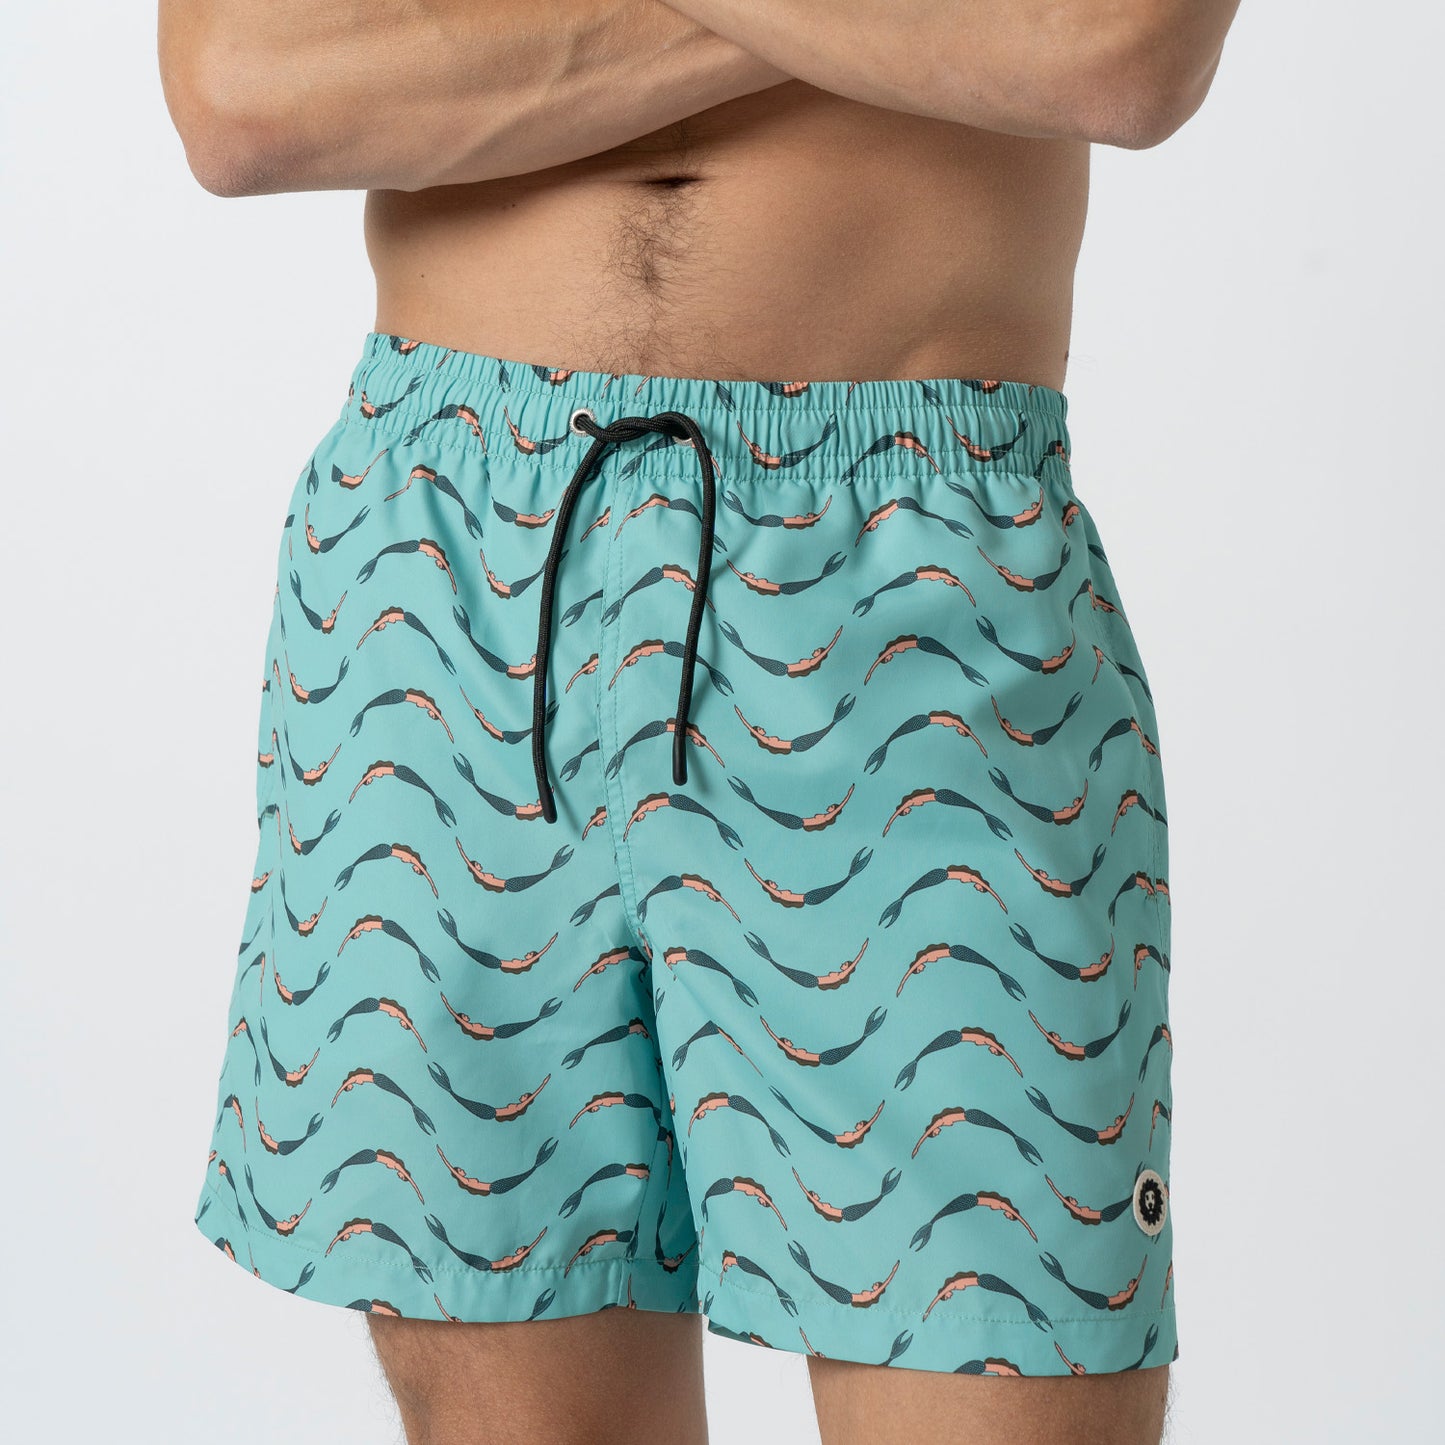 Mermaids Swim Shorts - Turquoise (4)